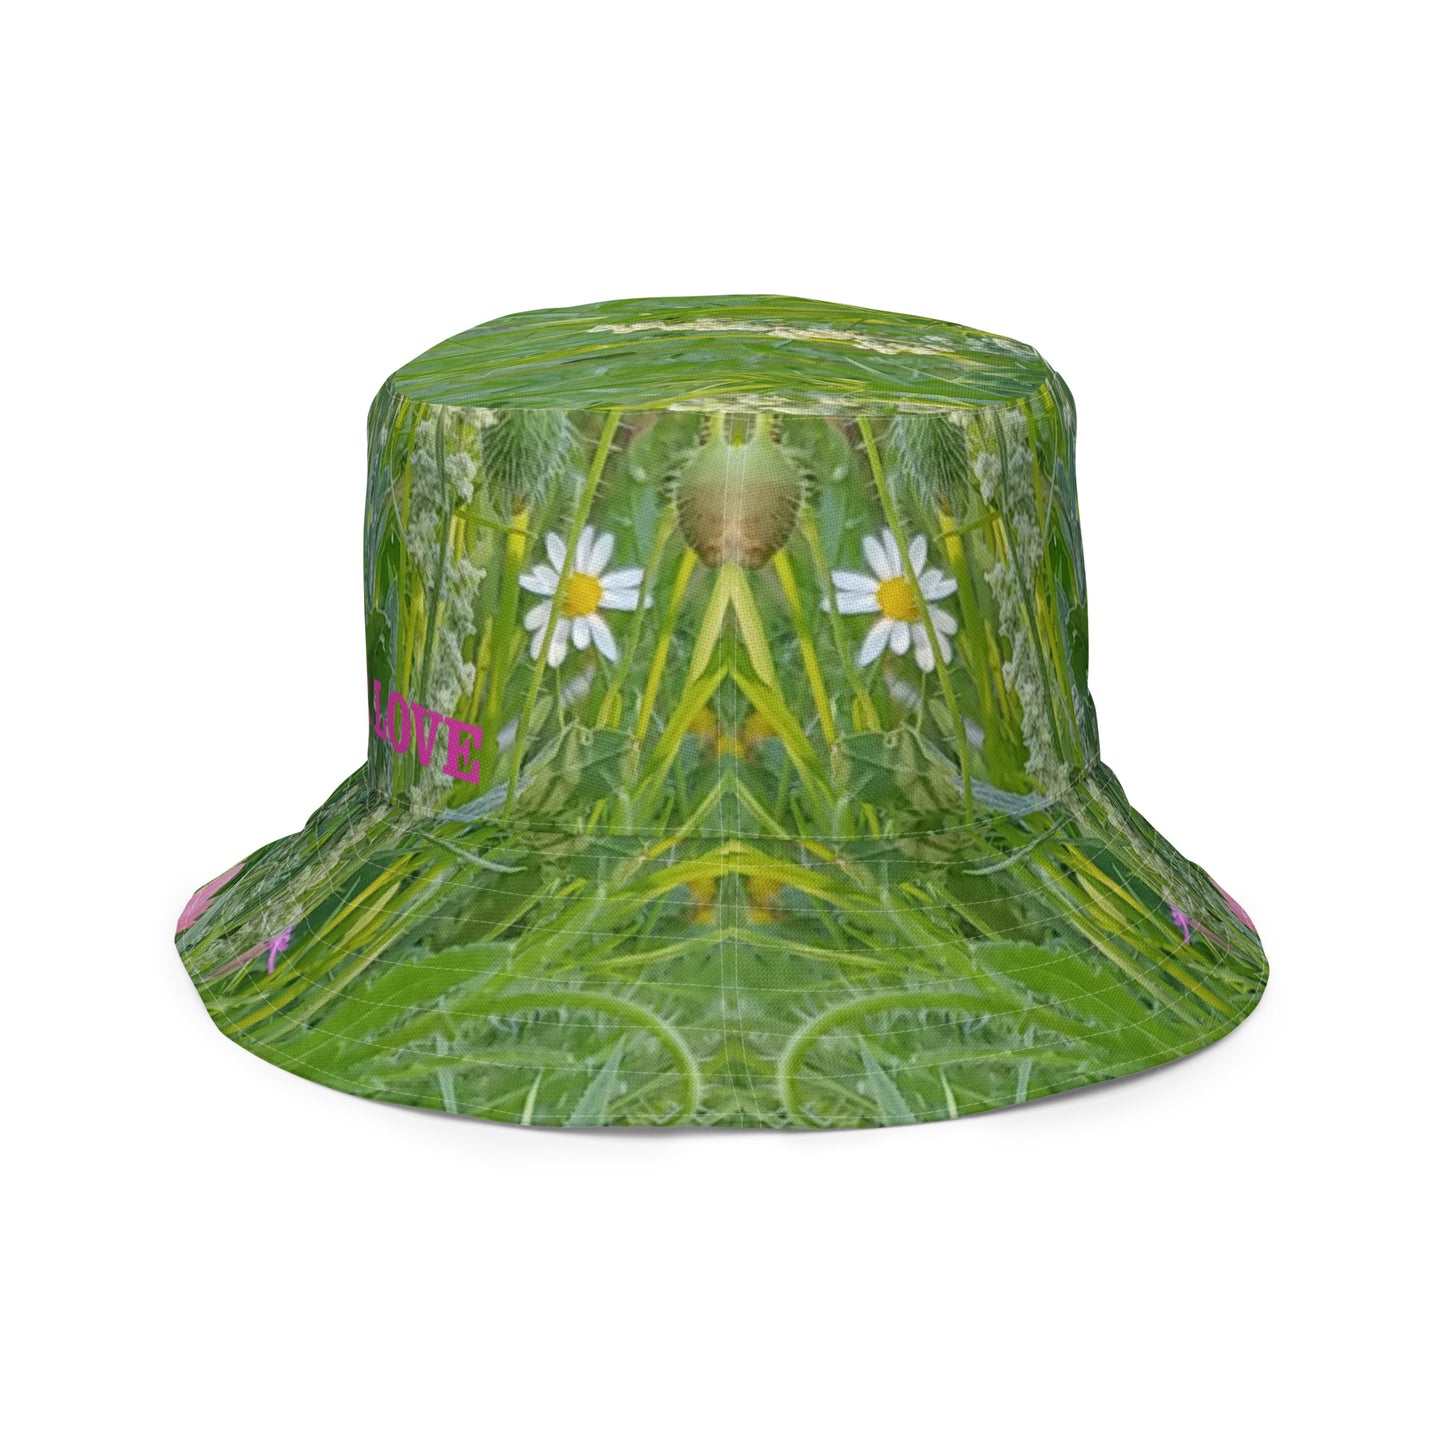 The FLOWER LOVE Collection - "Wildflower Wonder" Design Premium Reversible Bucket Hat - Green Inside - Wildflower Hat, Gifts for Her